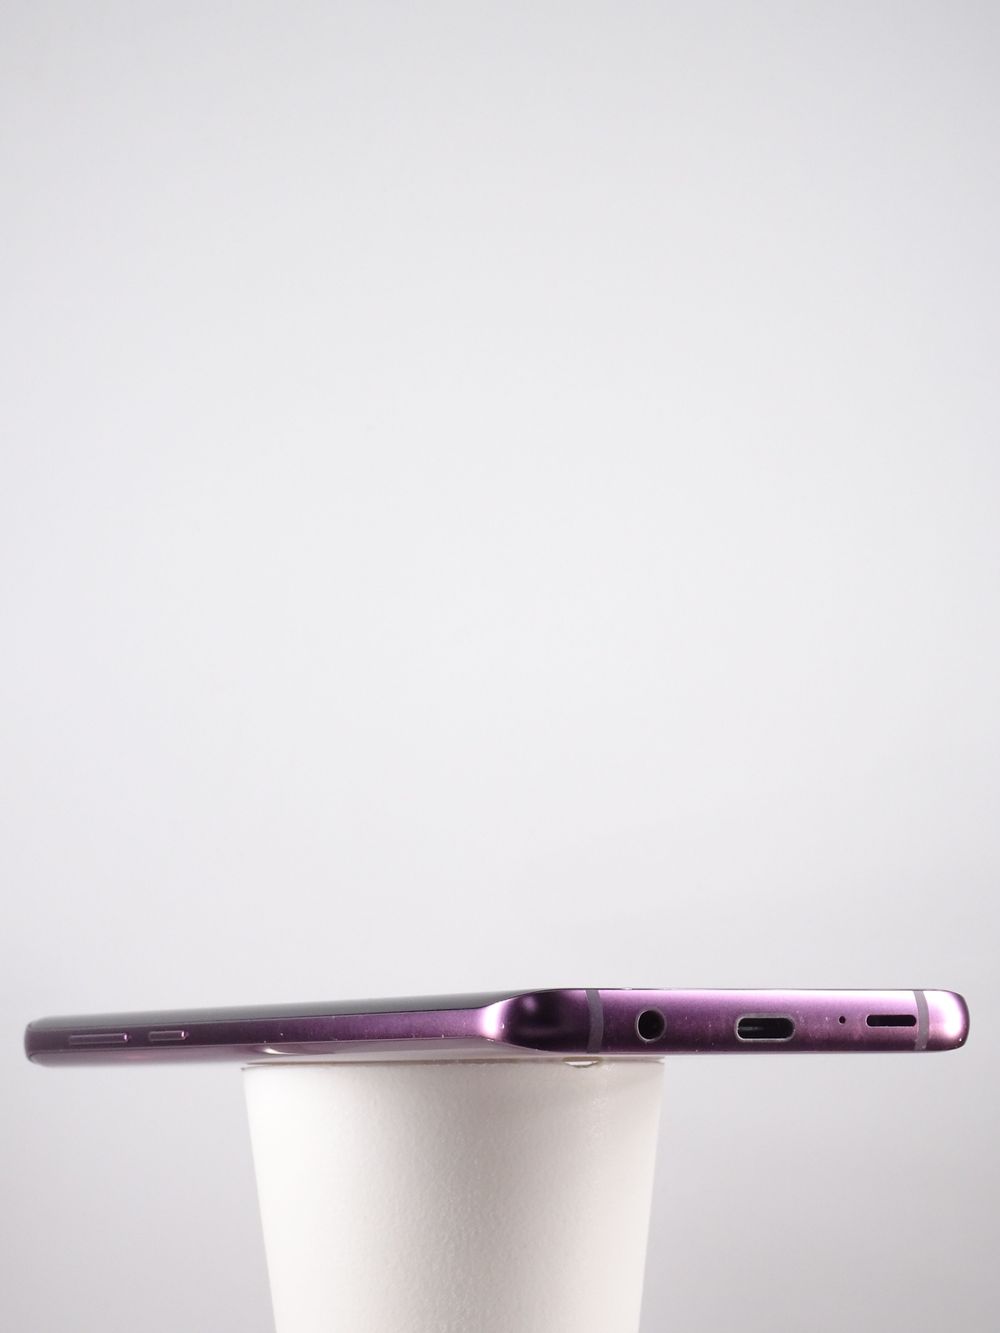 Telefon mobil Samsung Galaxy S9 Plus, Purple, 128 GB,  Ca Nou